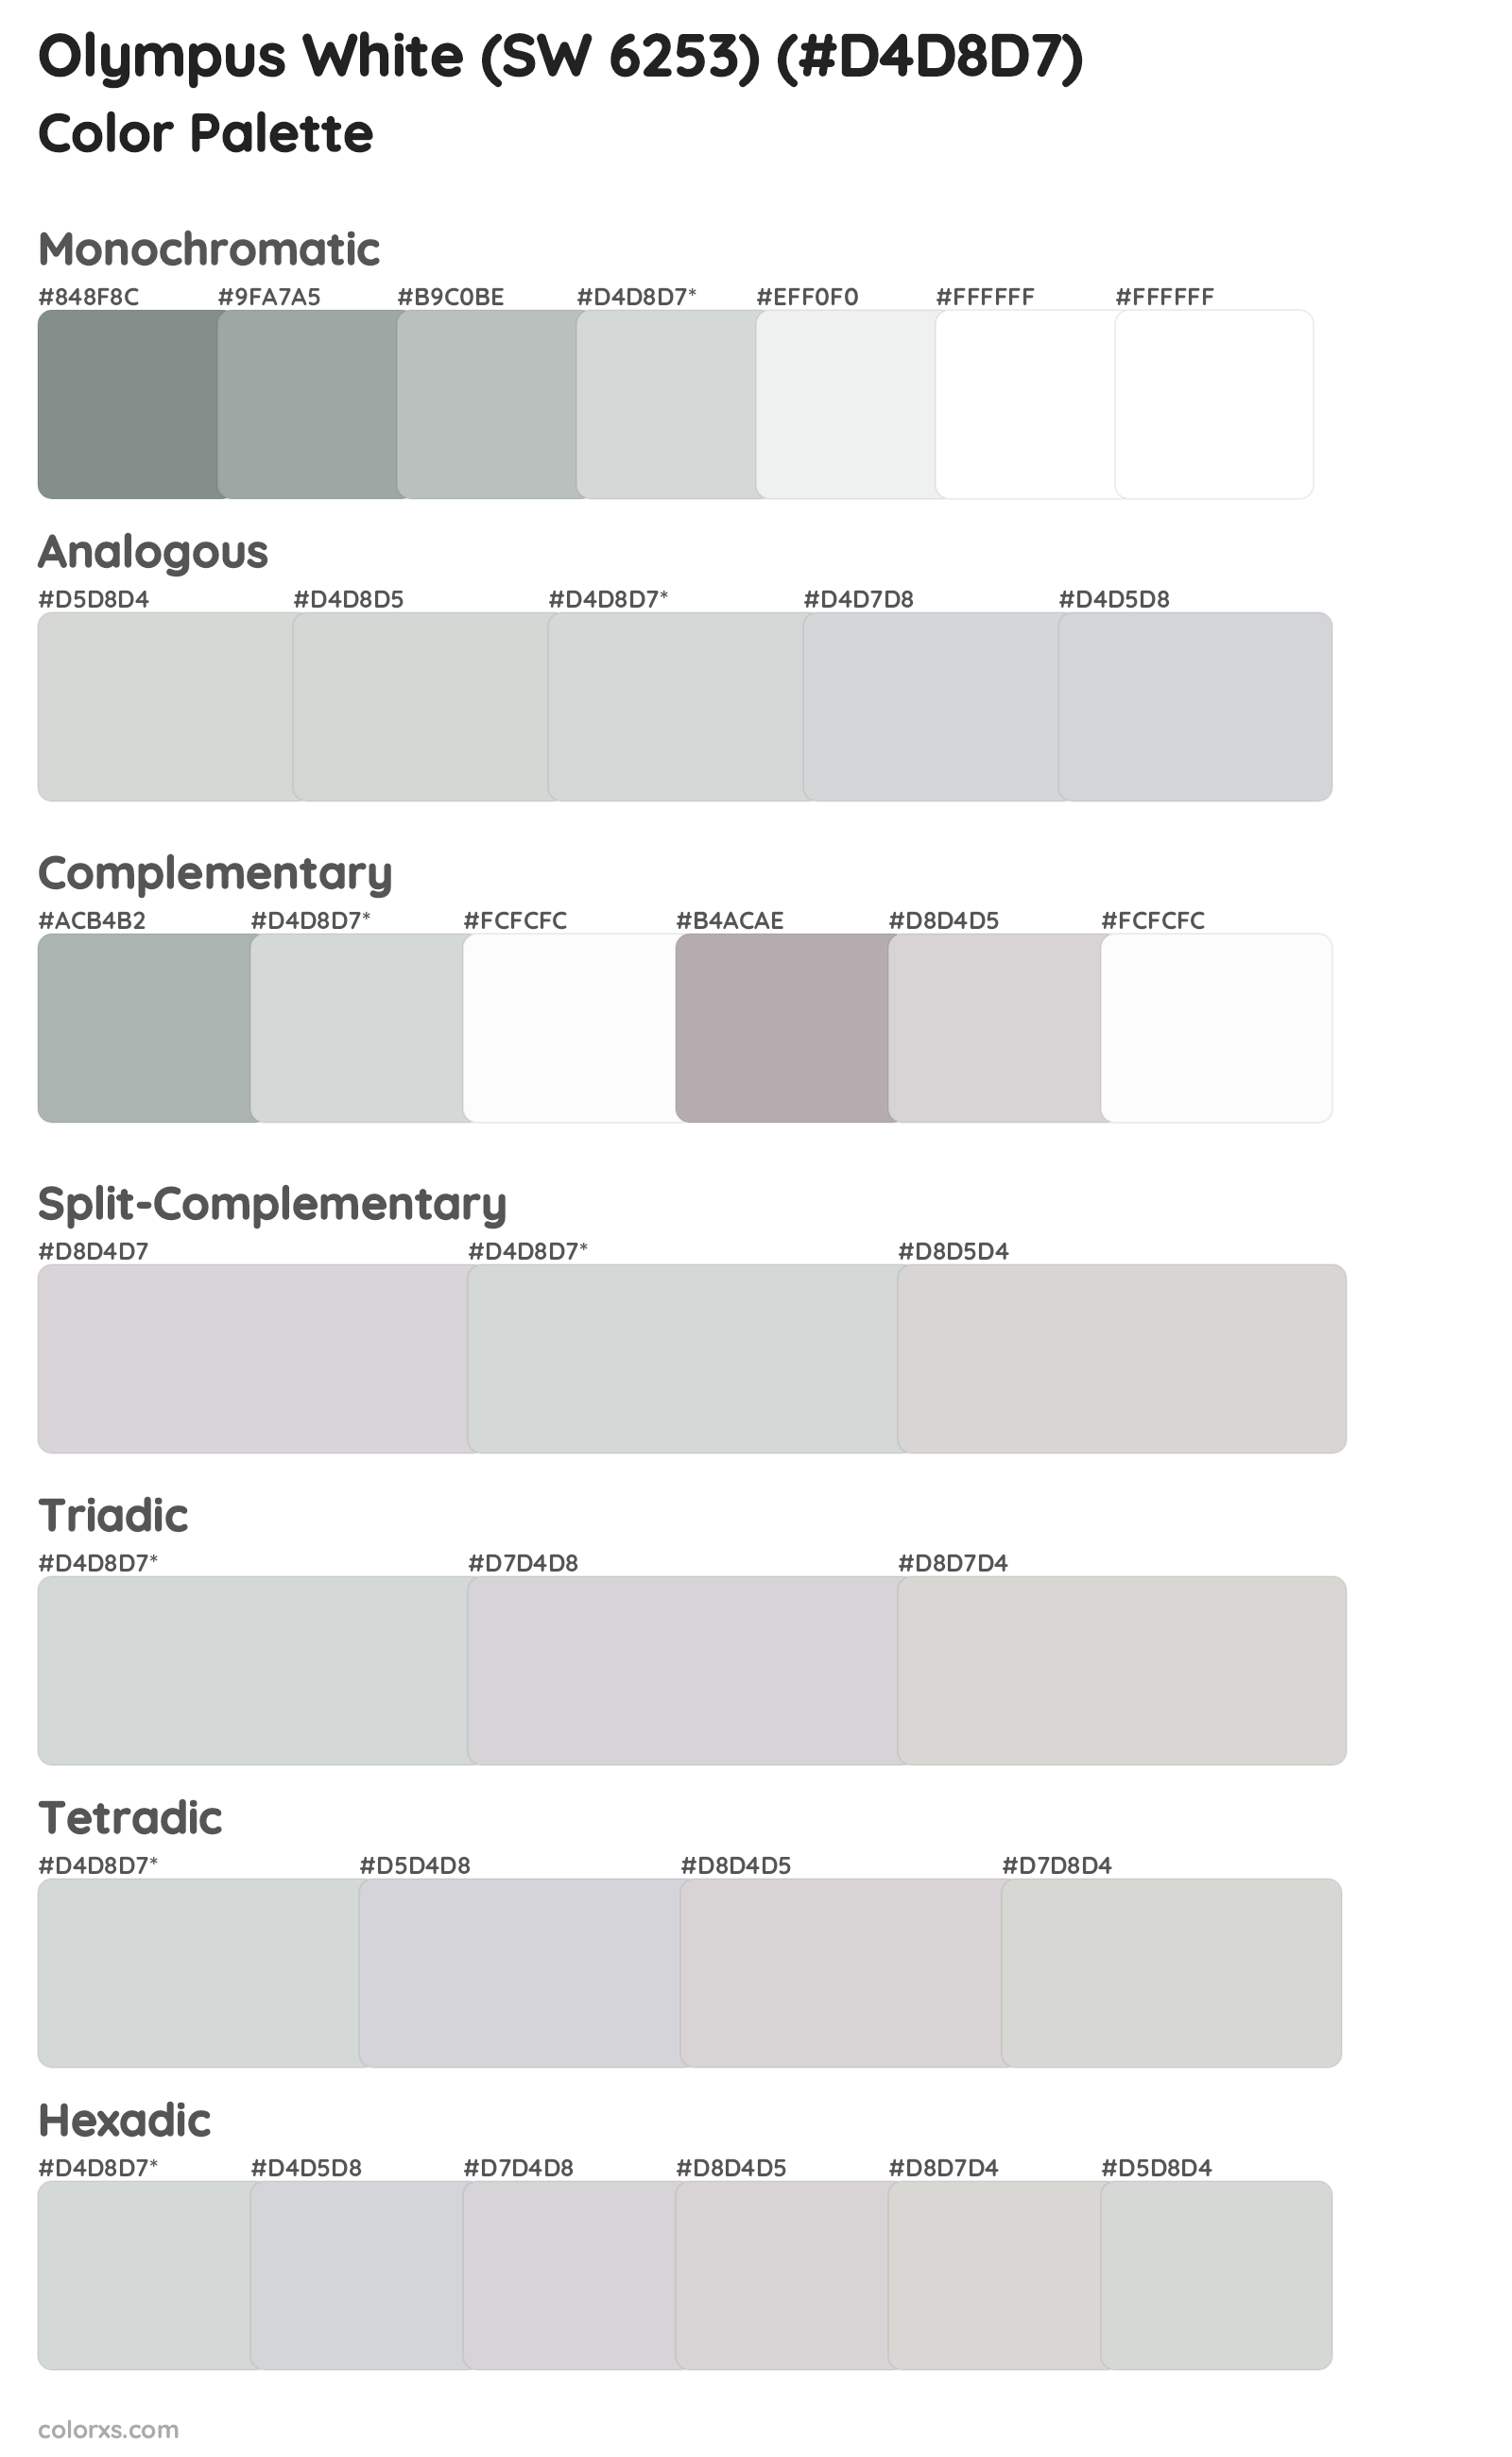 Olympus White (SW 6253) Color Scheme Palettes